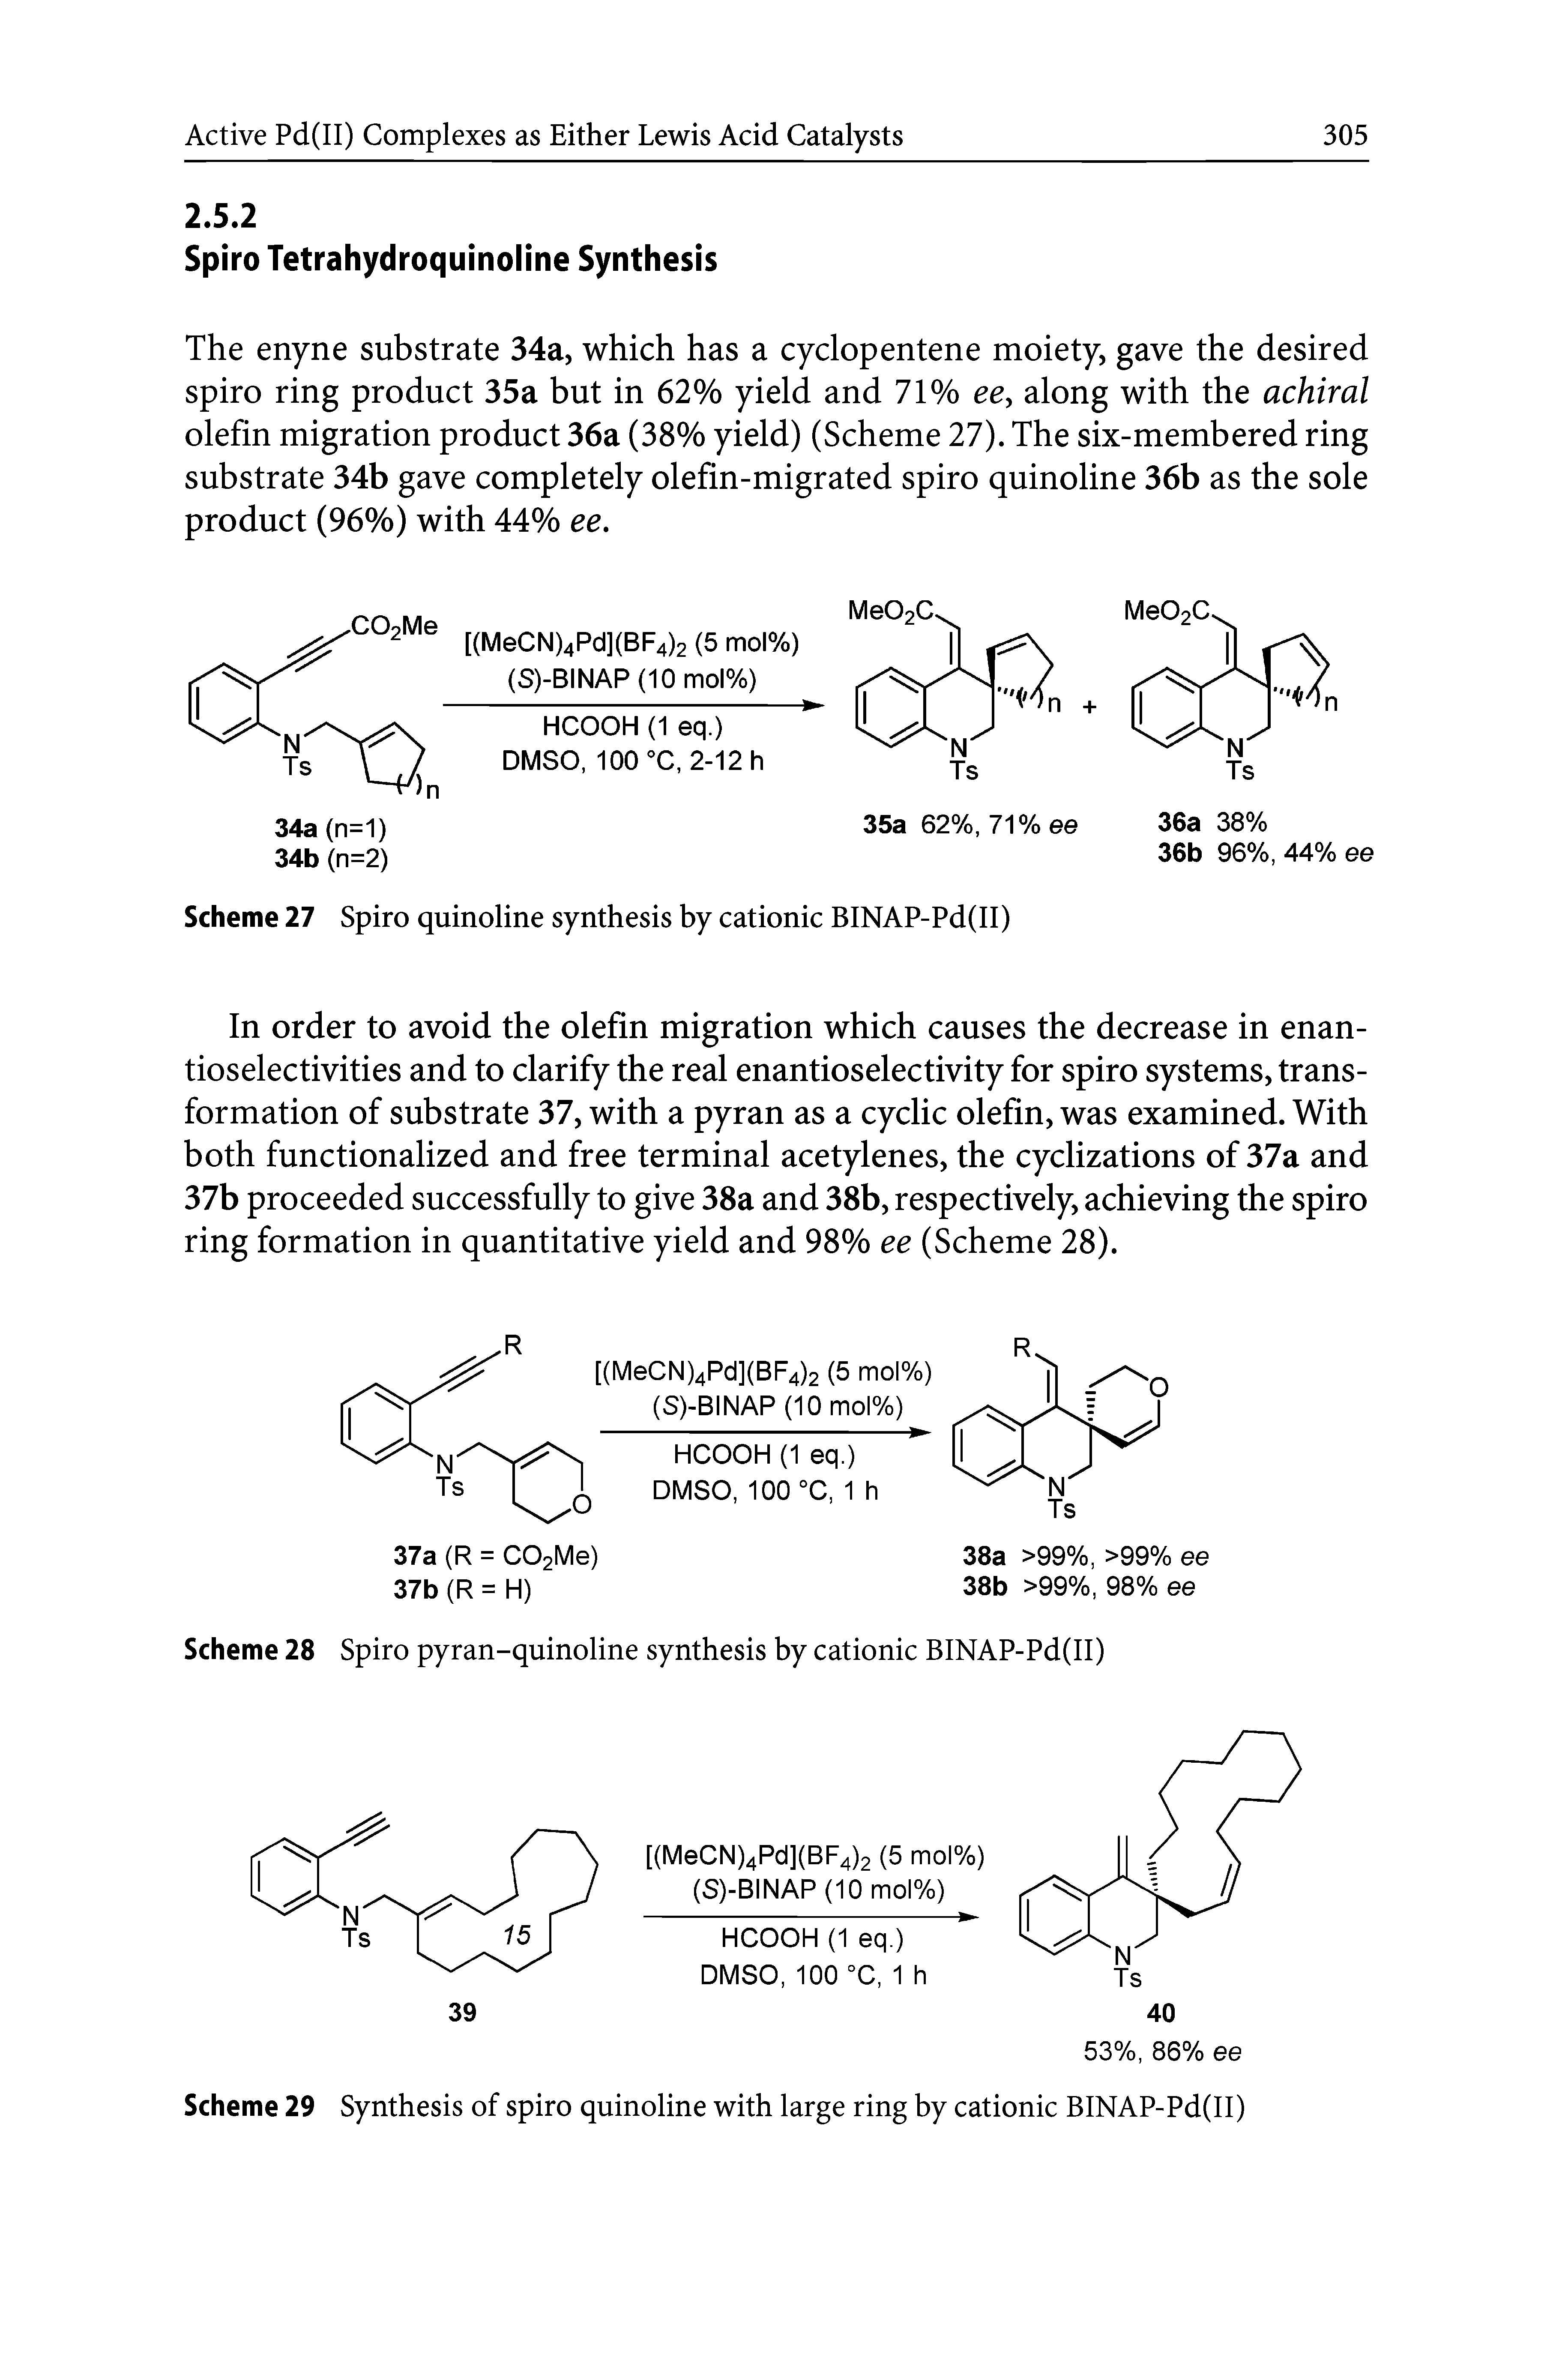 Scheme 28 Spiro pyran-quinoline synthesis by cationic BINAP-Pd(II)...